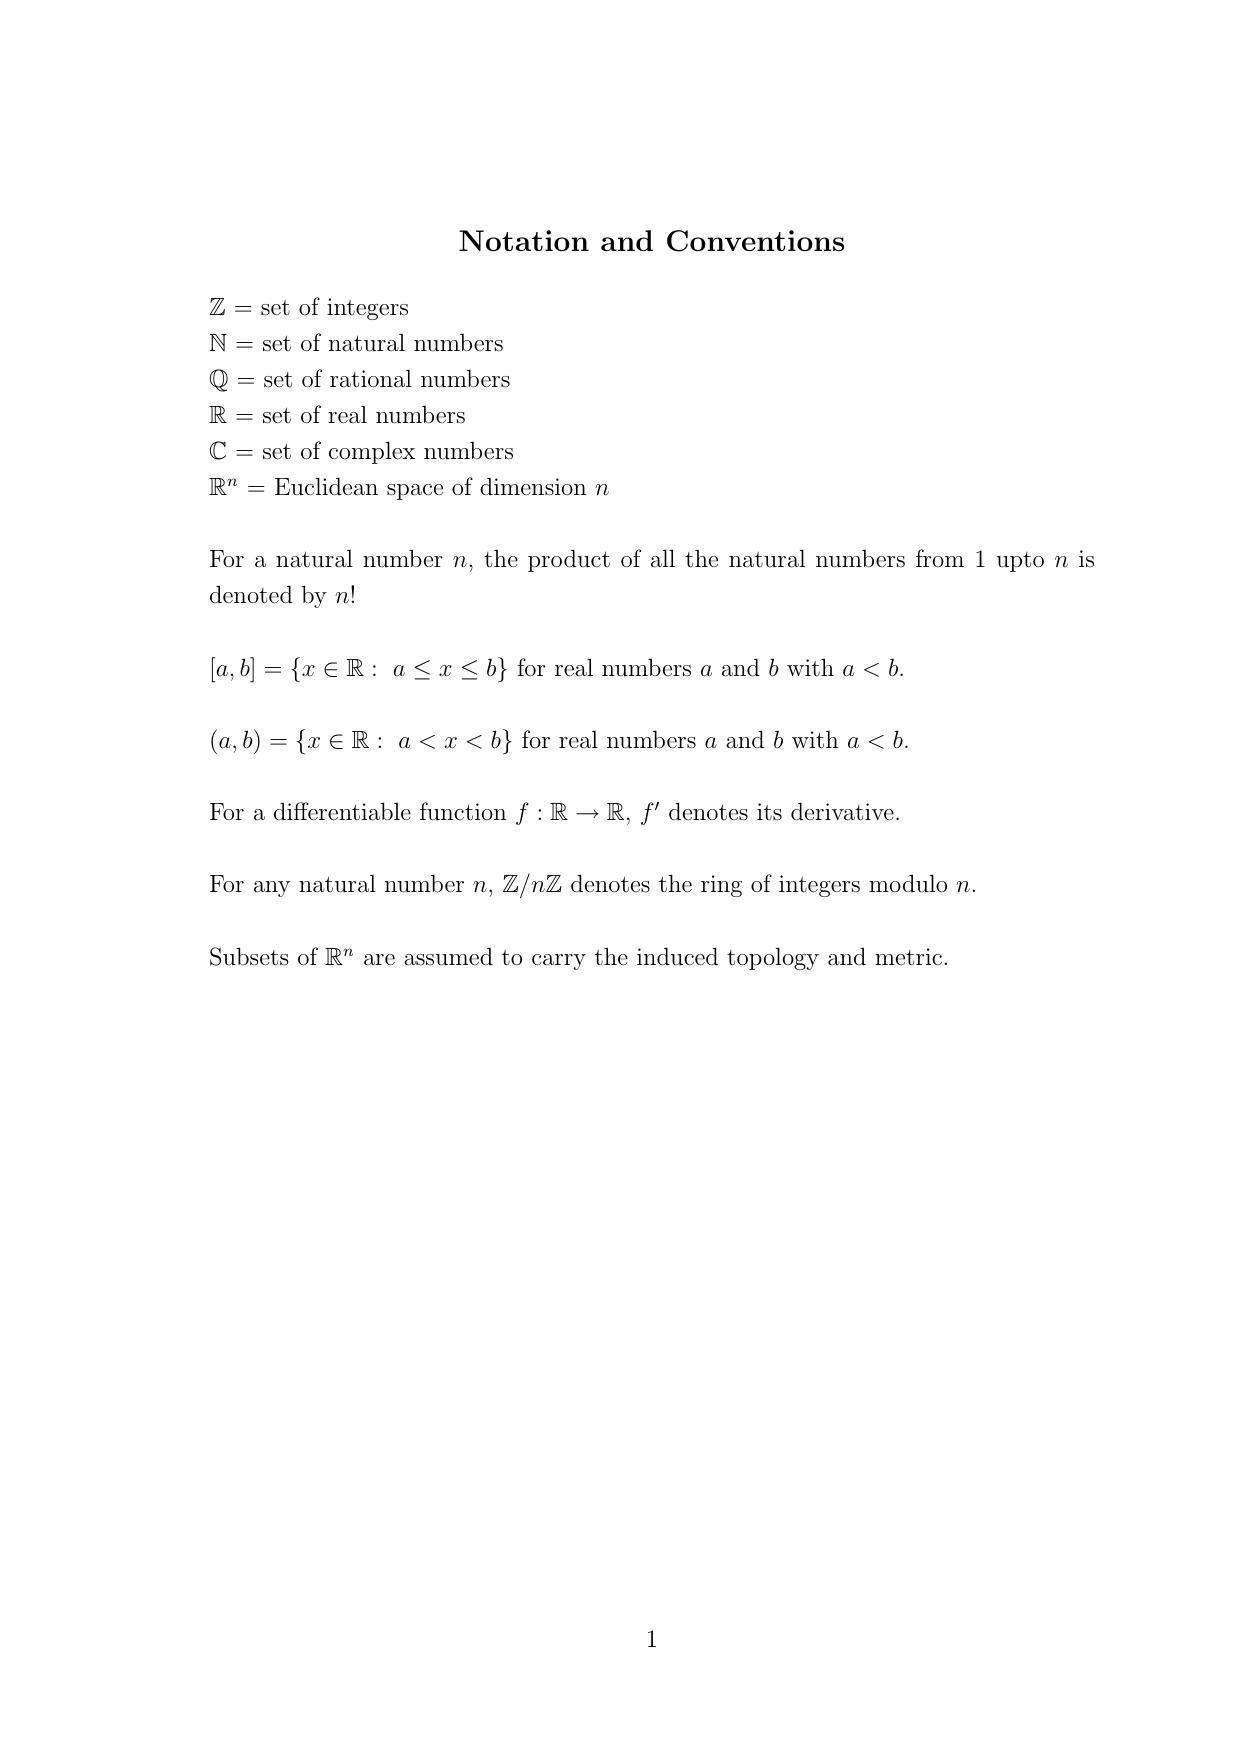 TIFR GS 2011 Mathematics Question Paper - Page 1